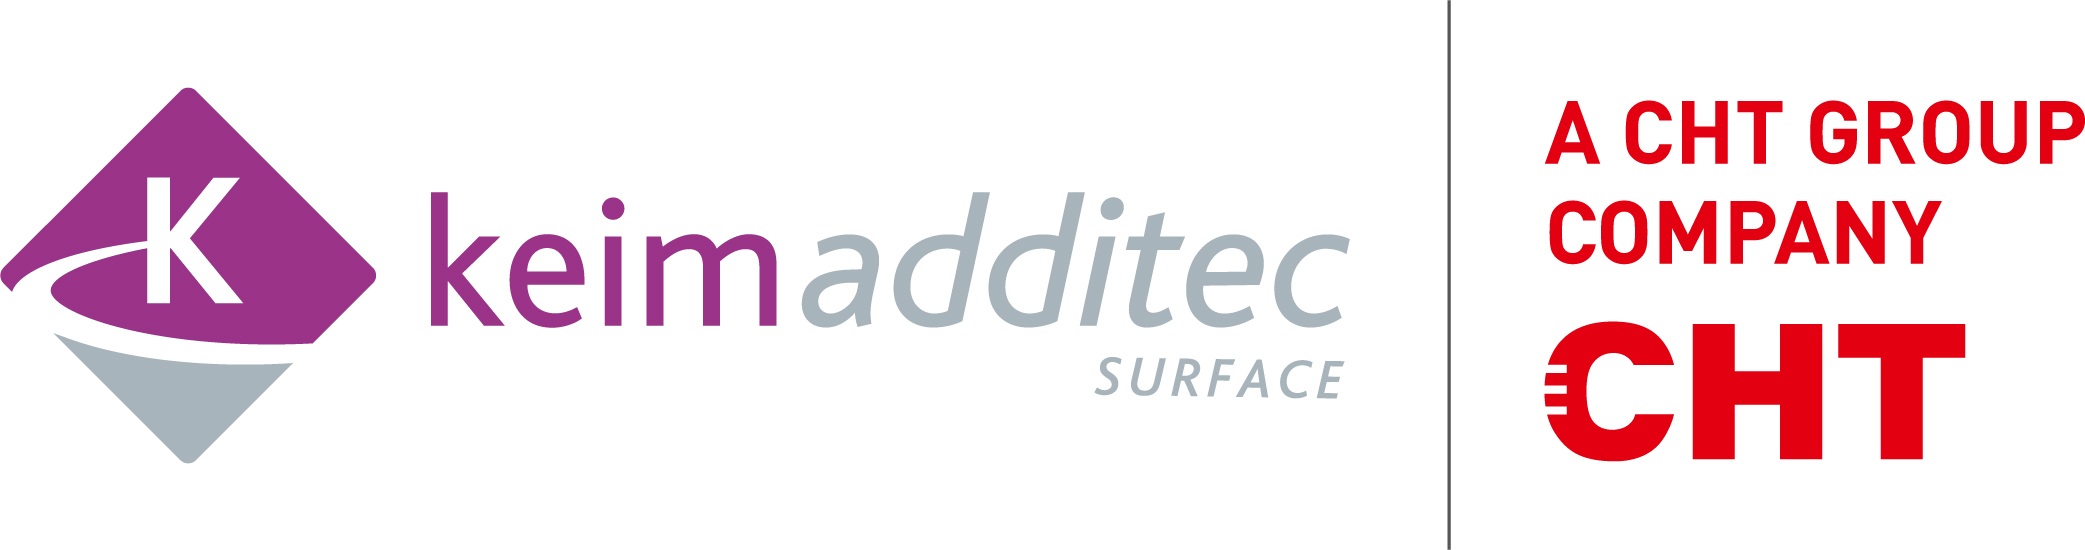 Keim Additec Surface GmbH˾_logo